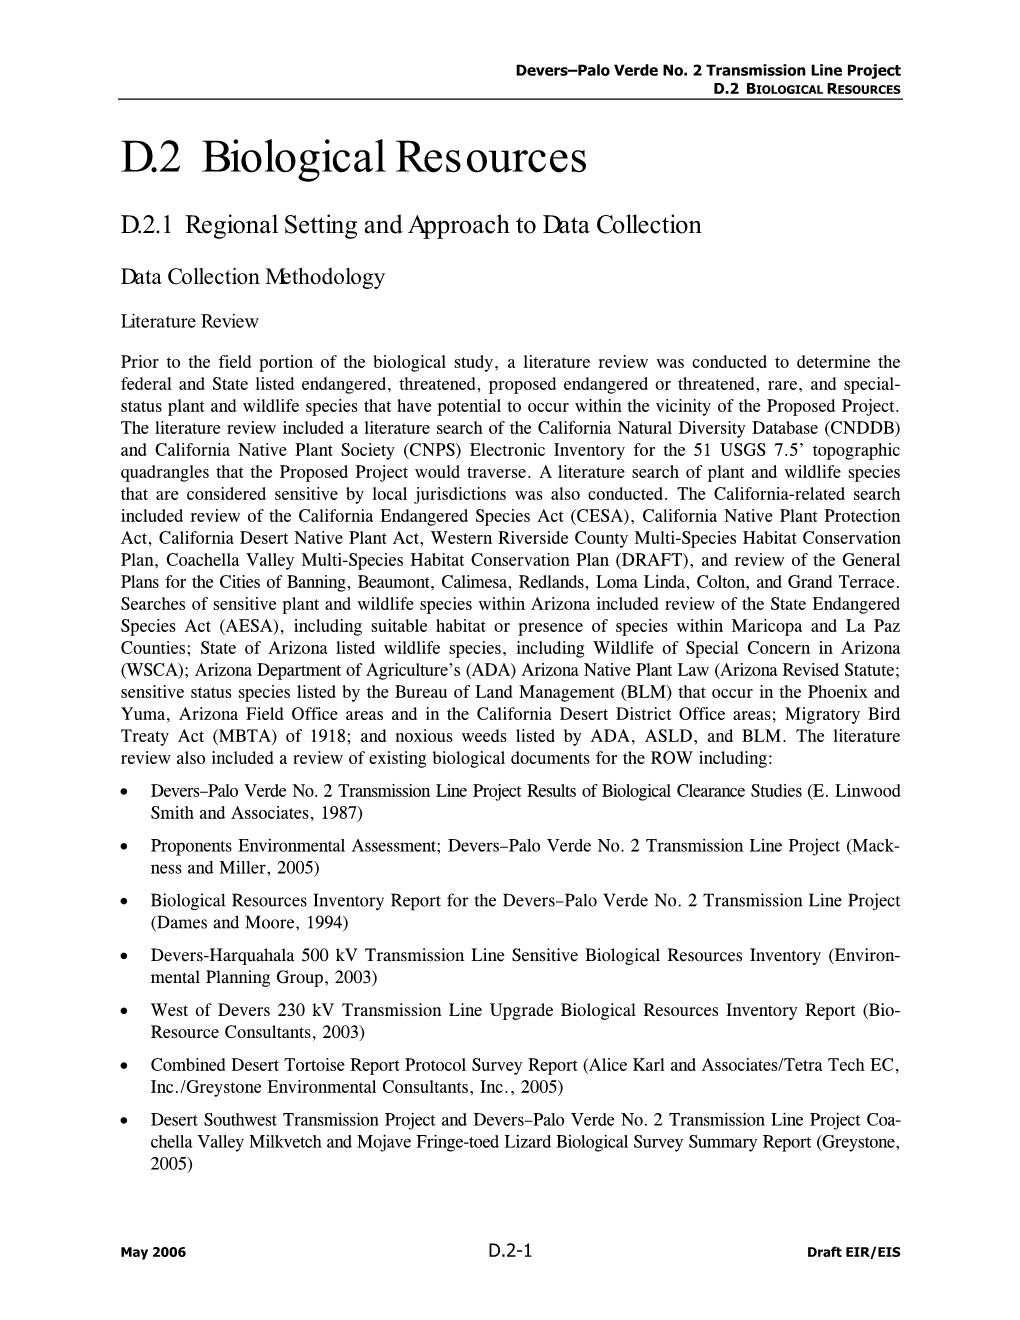 D.2 Biological Resources